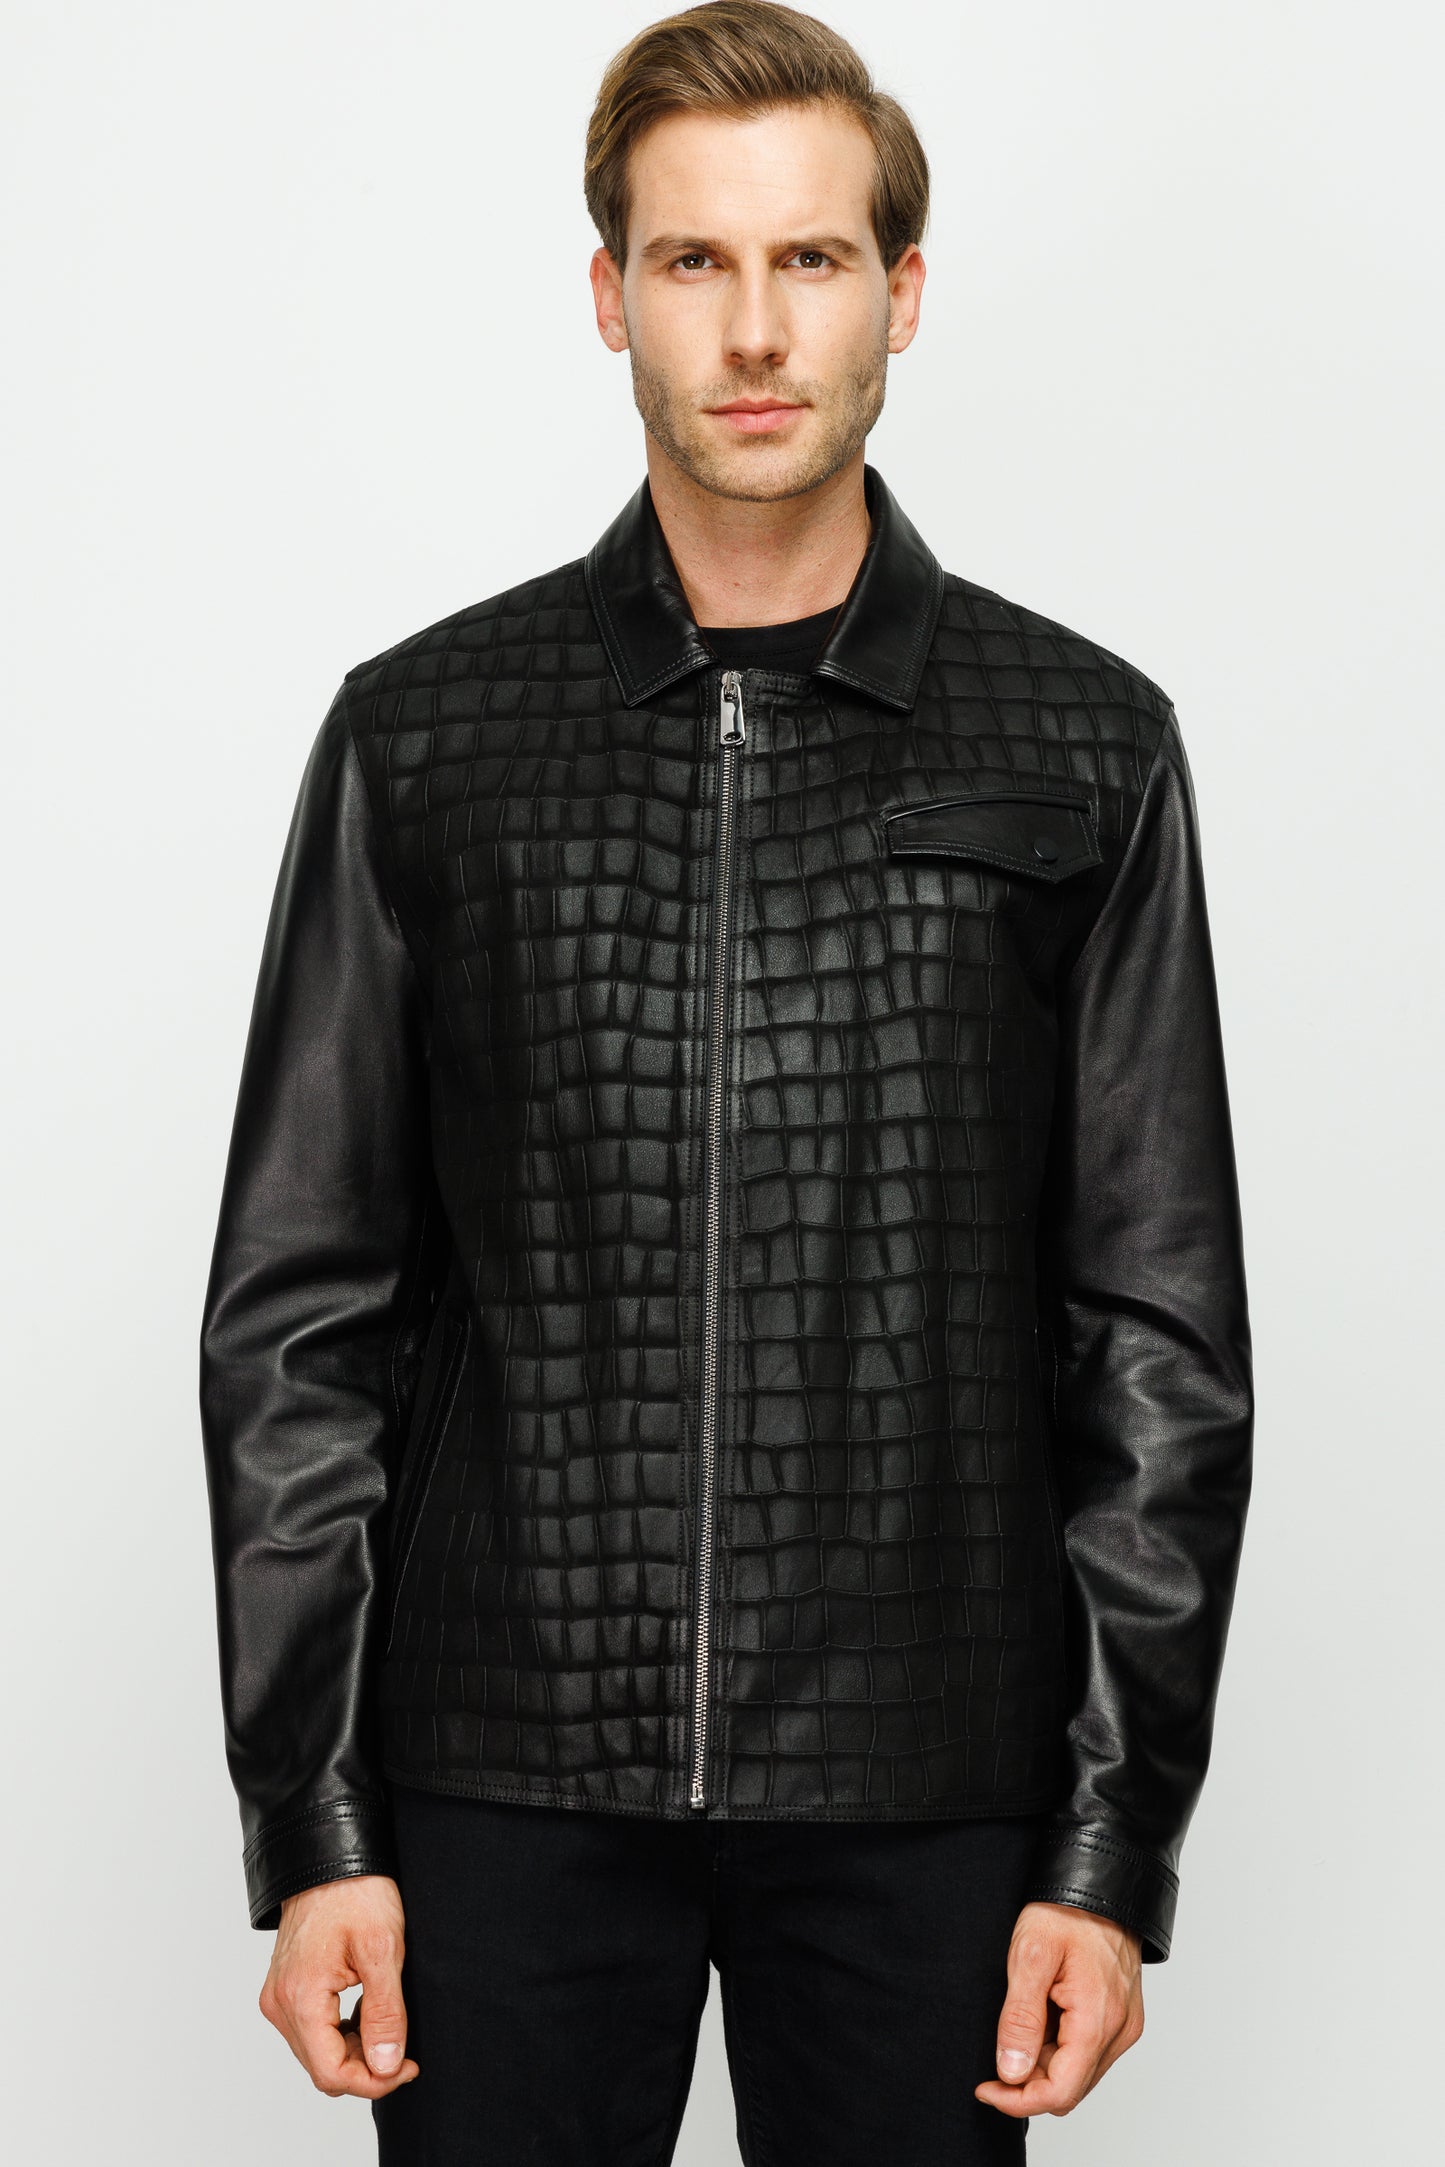 The Emerson Black Leather Men Jacket